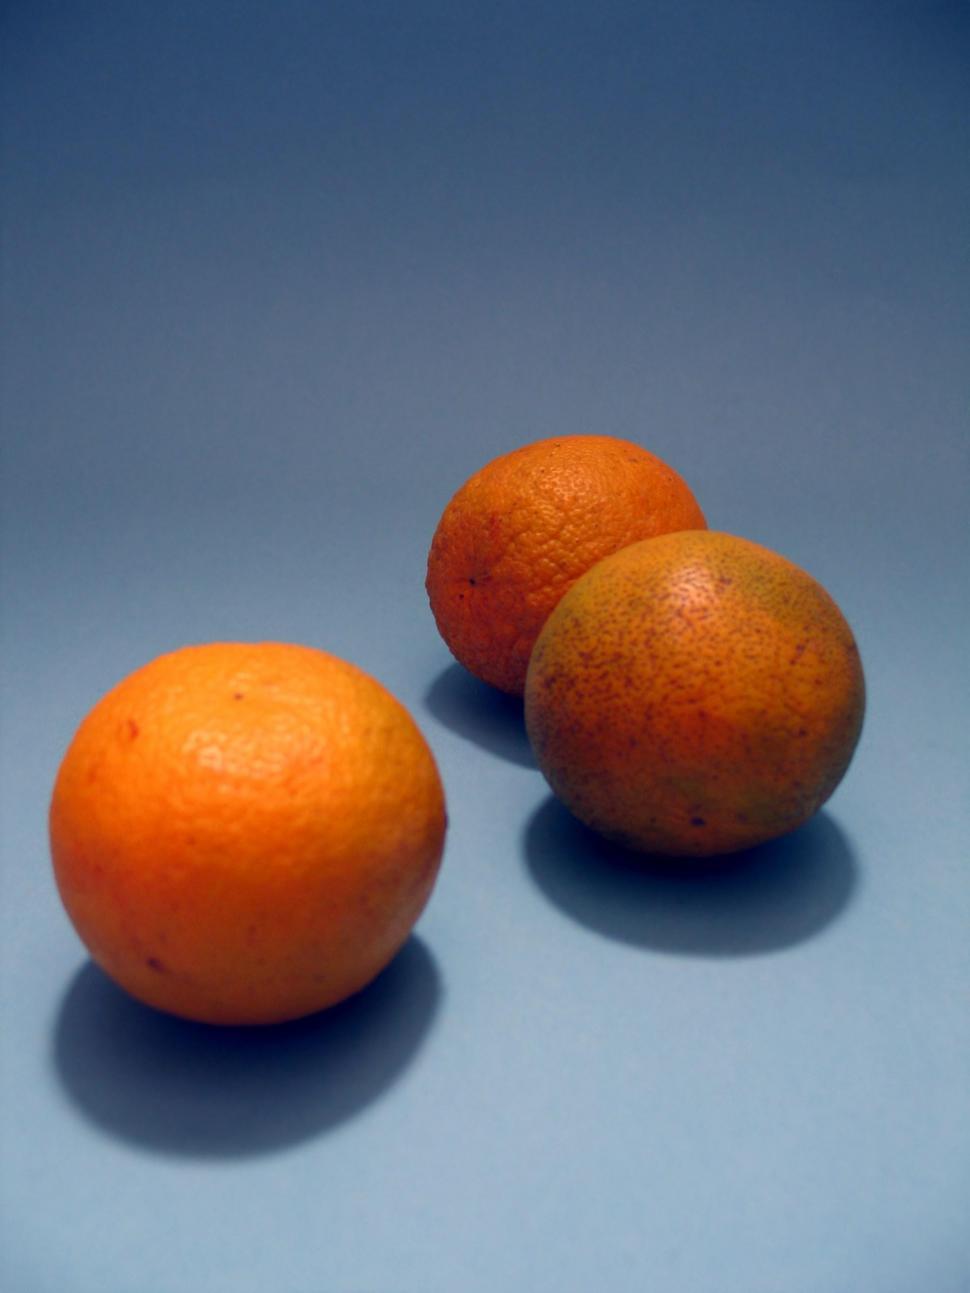 Free Image of Three Oranges on Blue Surface 